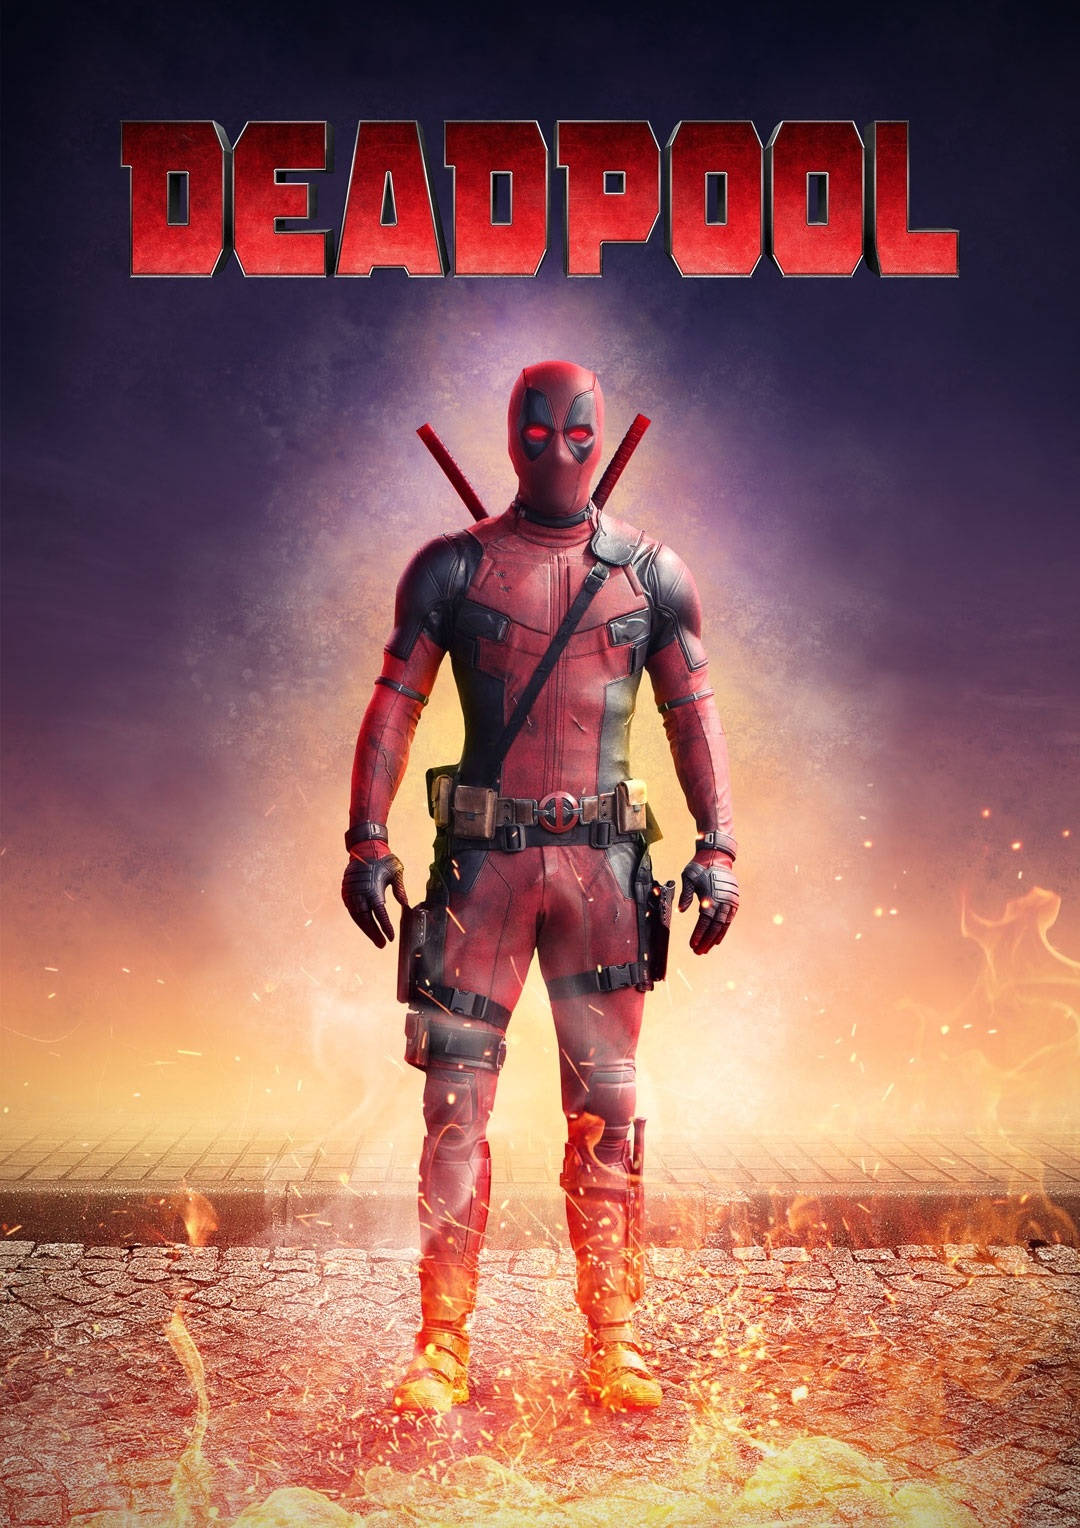 Deadpoolfilm Fire Poster Fanart: Deadpool Films Eldaffisch Fanart Wallpaper